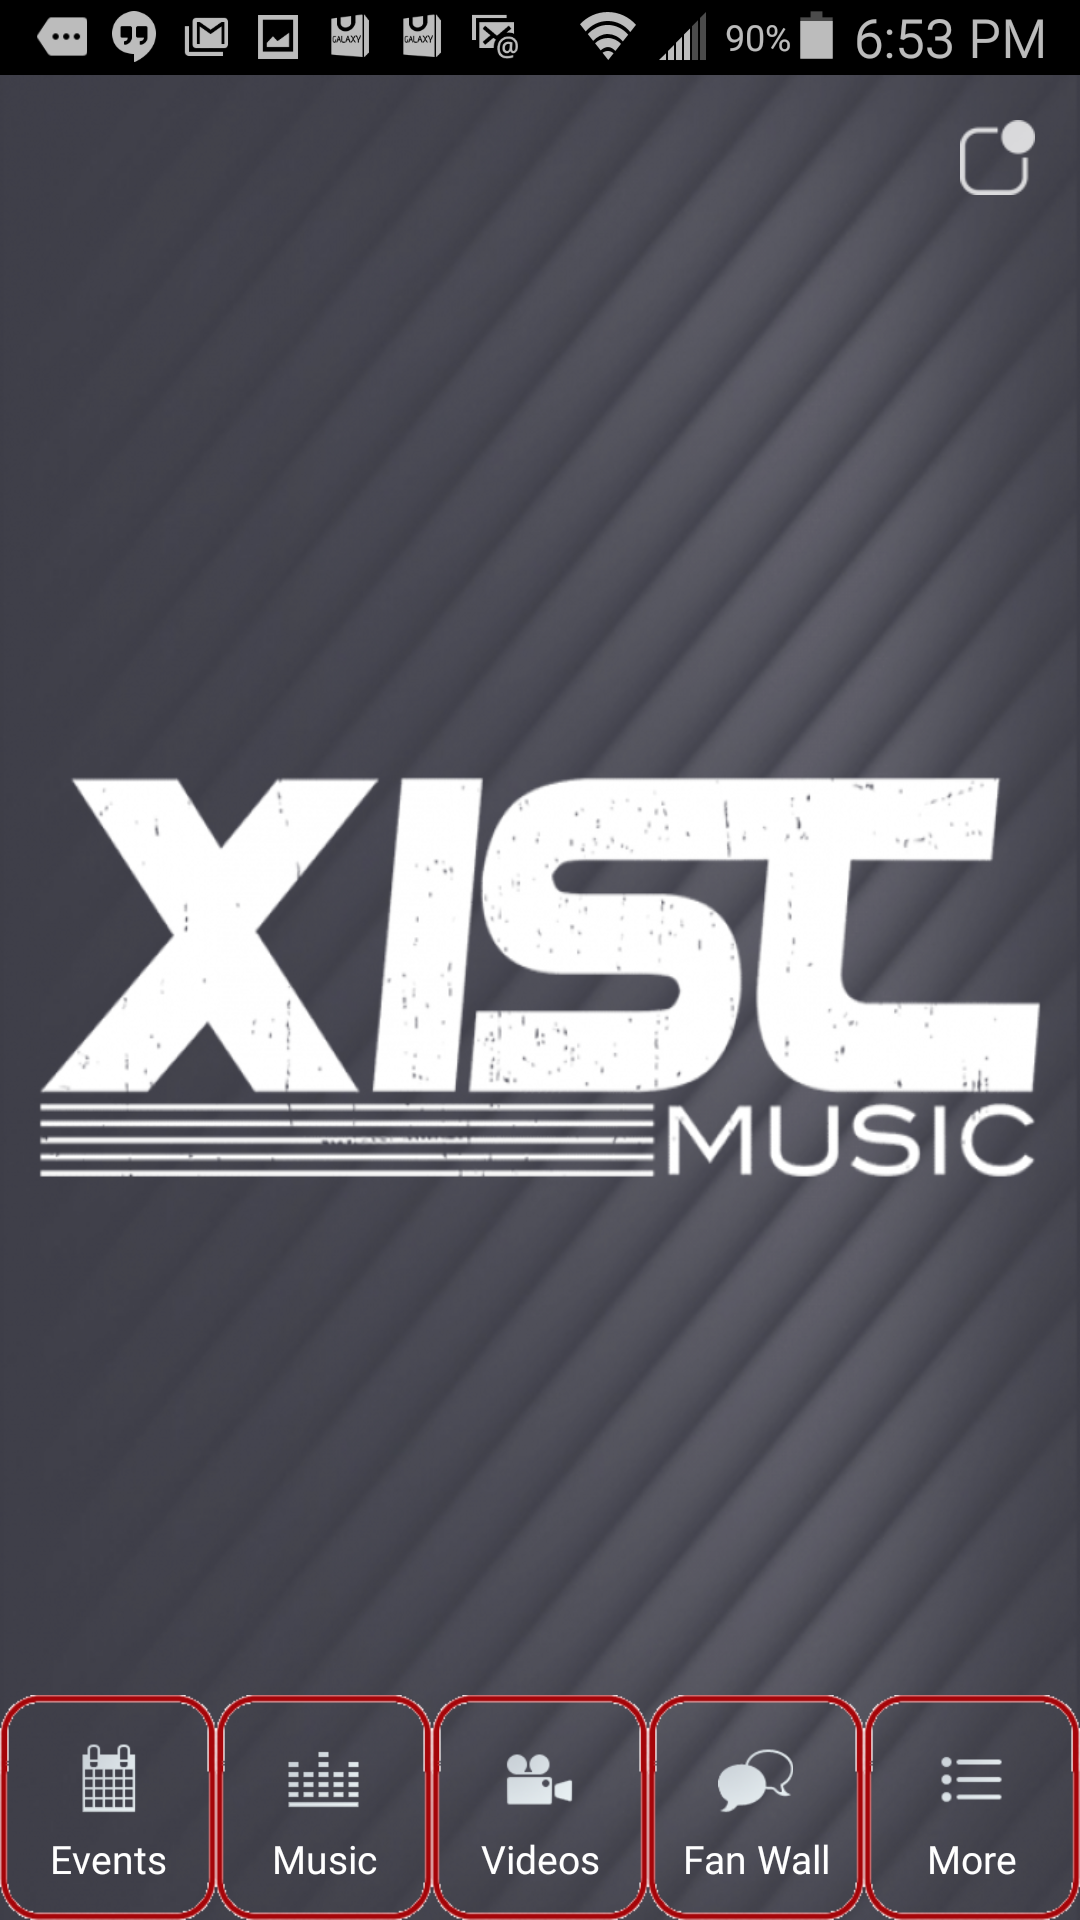 XIST Music App